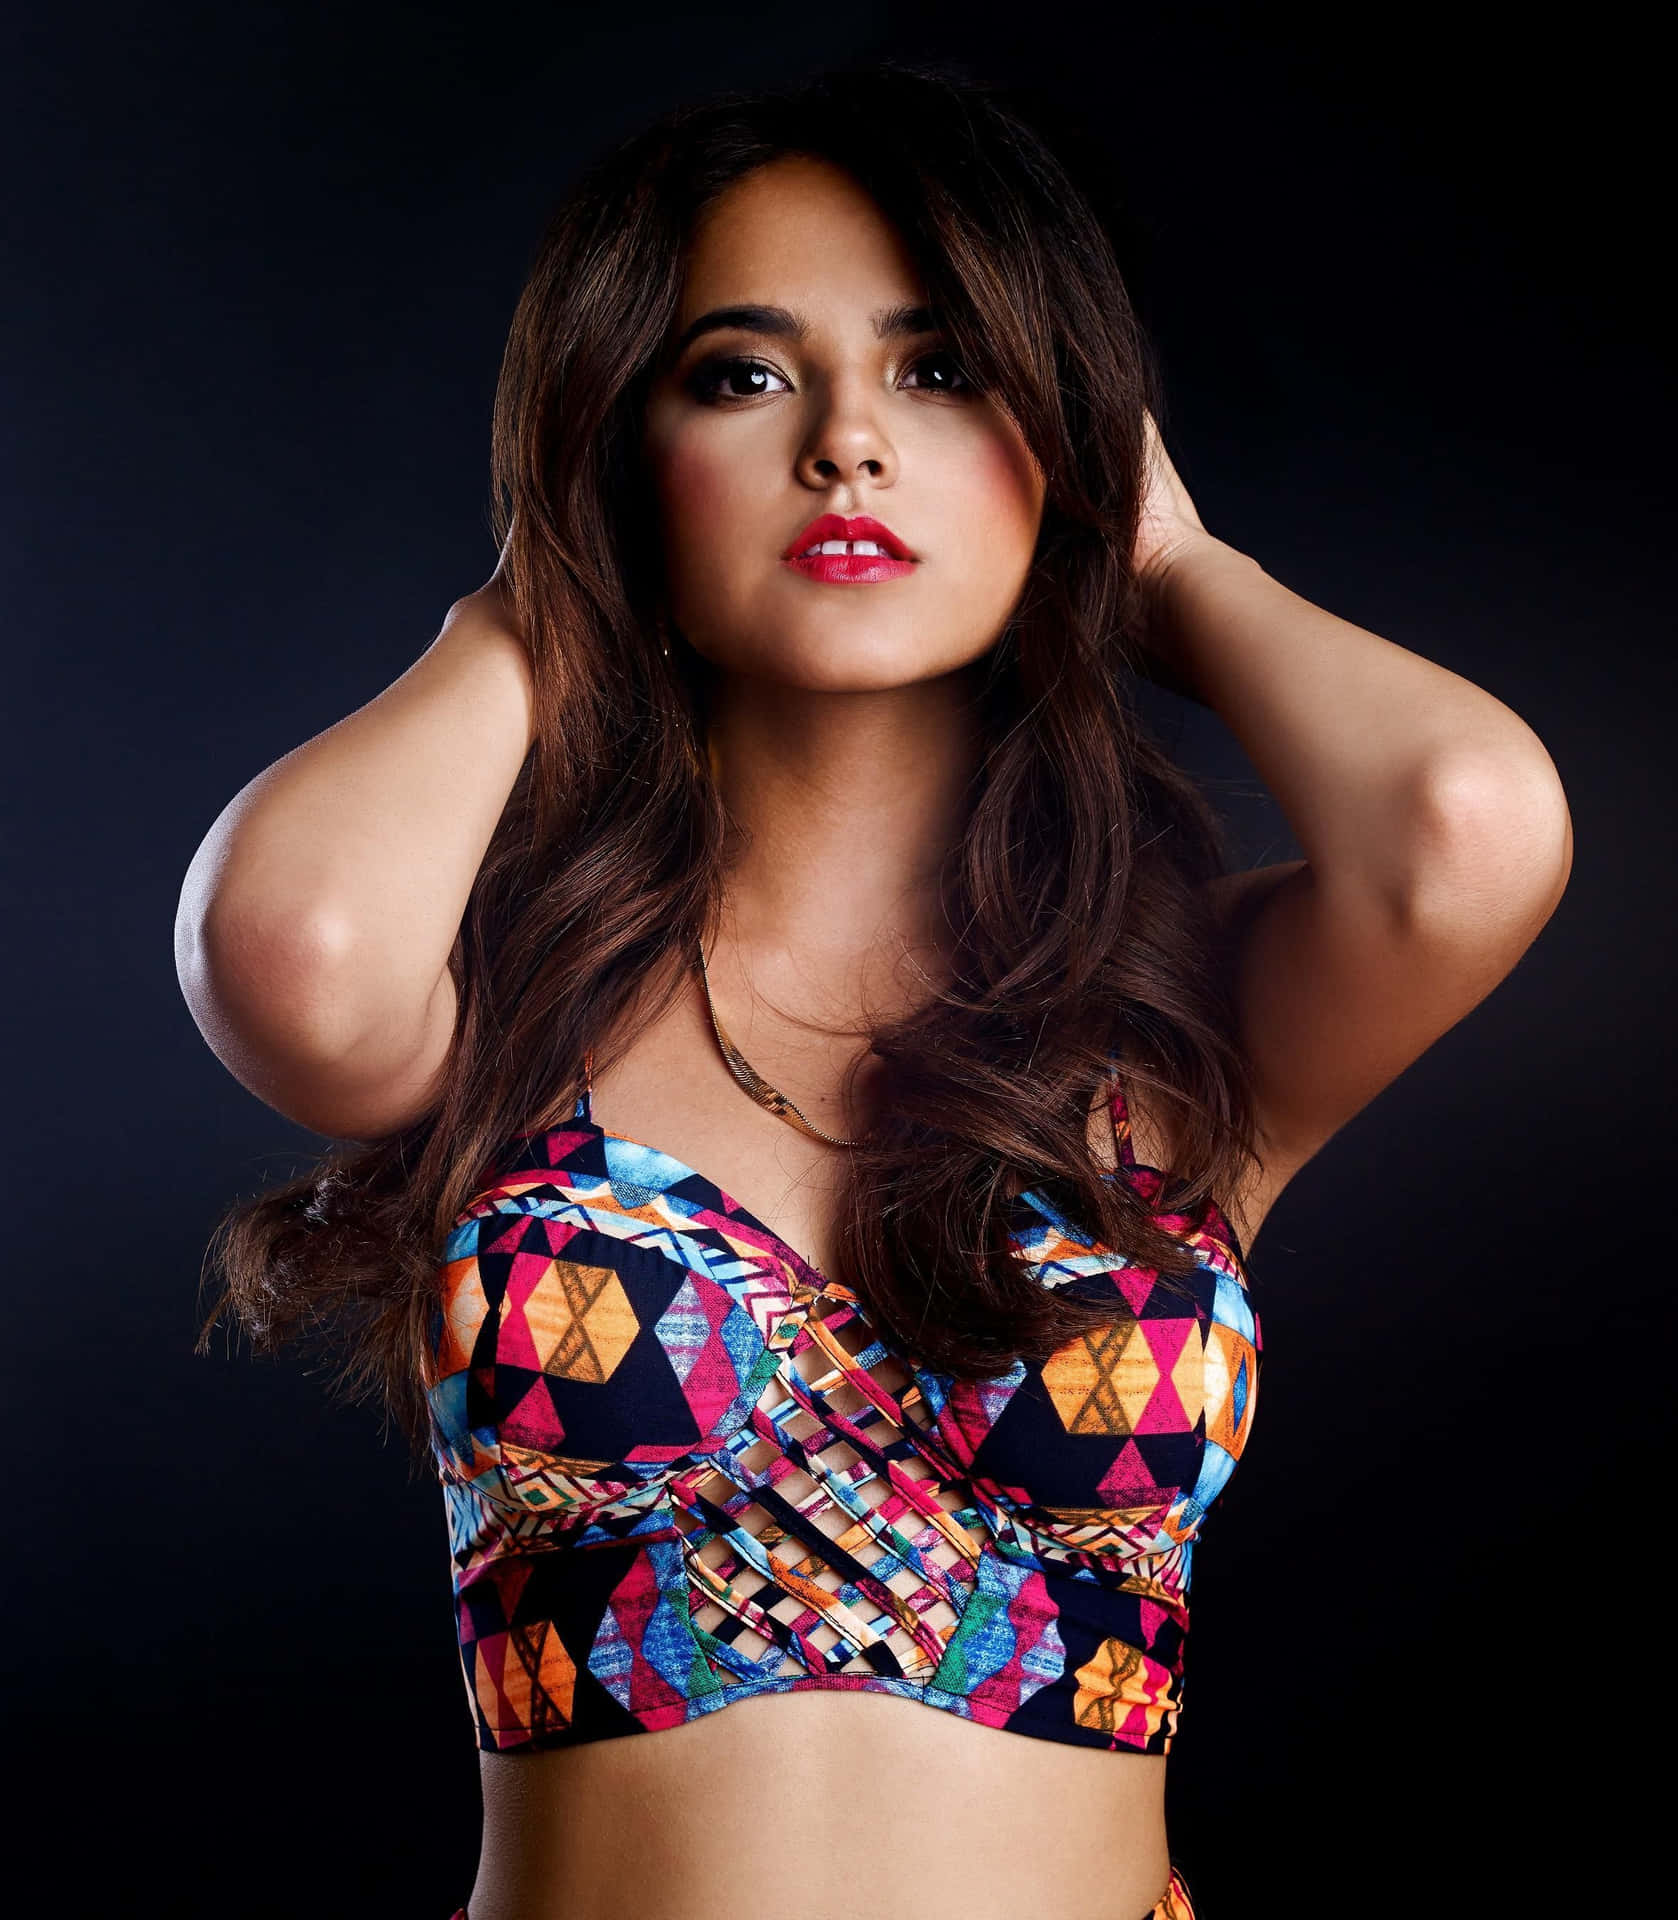 Beckyg - En Talentfuld Latinamerikansk Sangerinhje